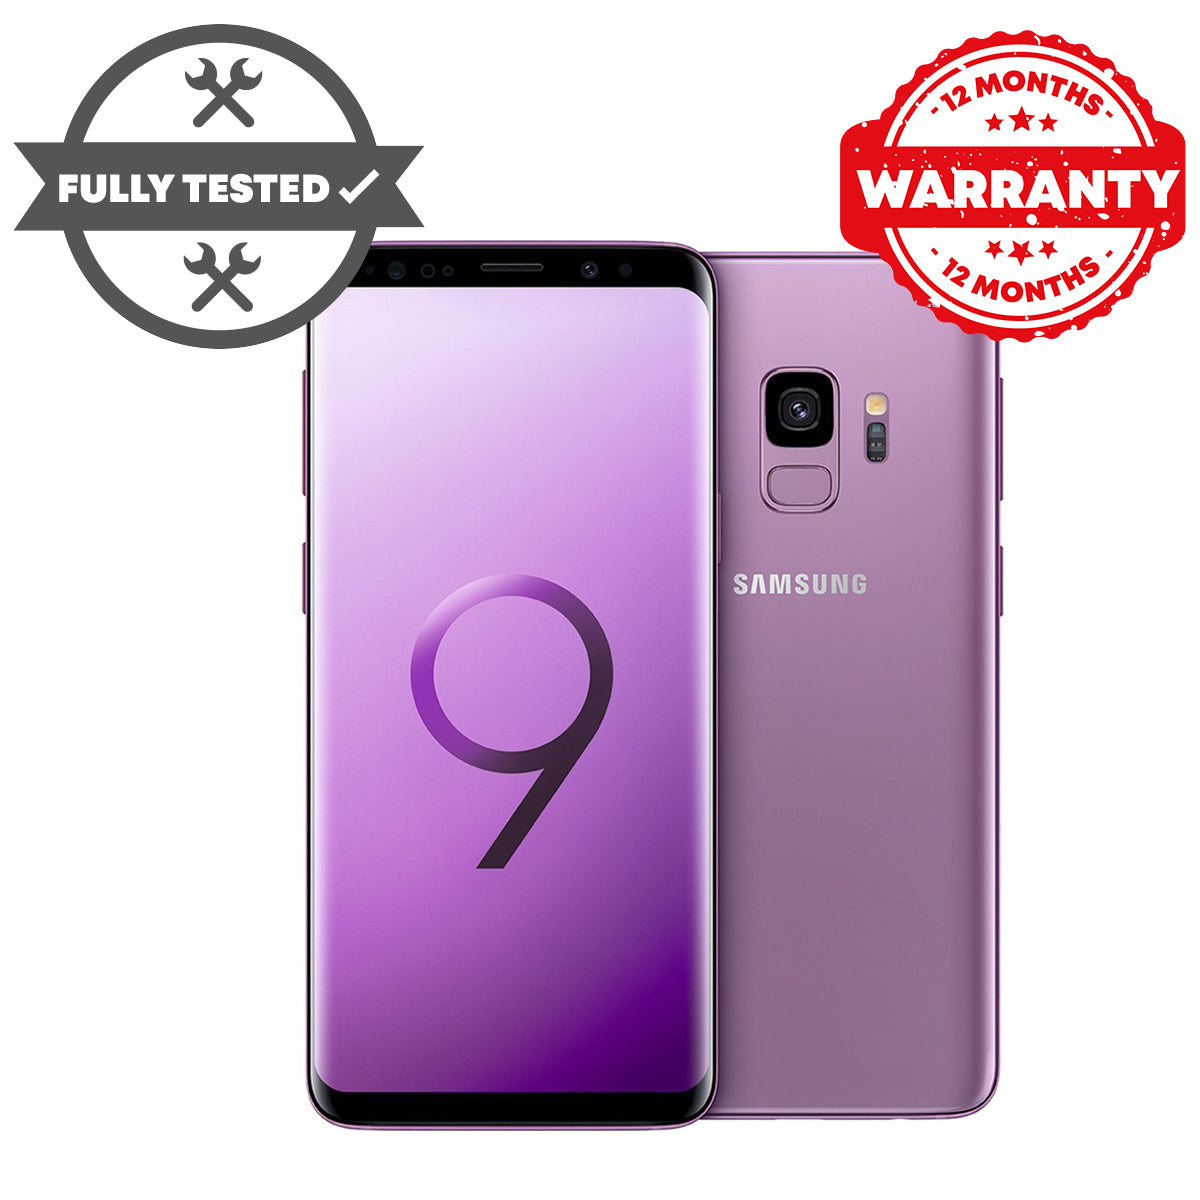 Samsung Galaxy S9 Plus Purple